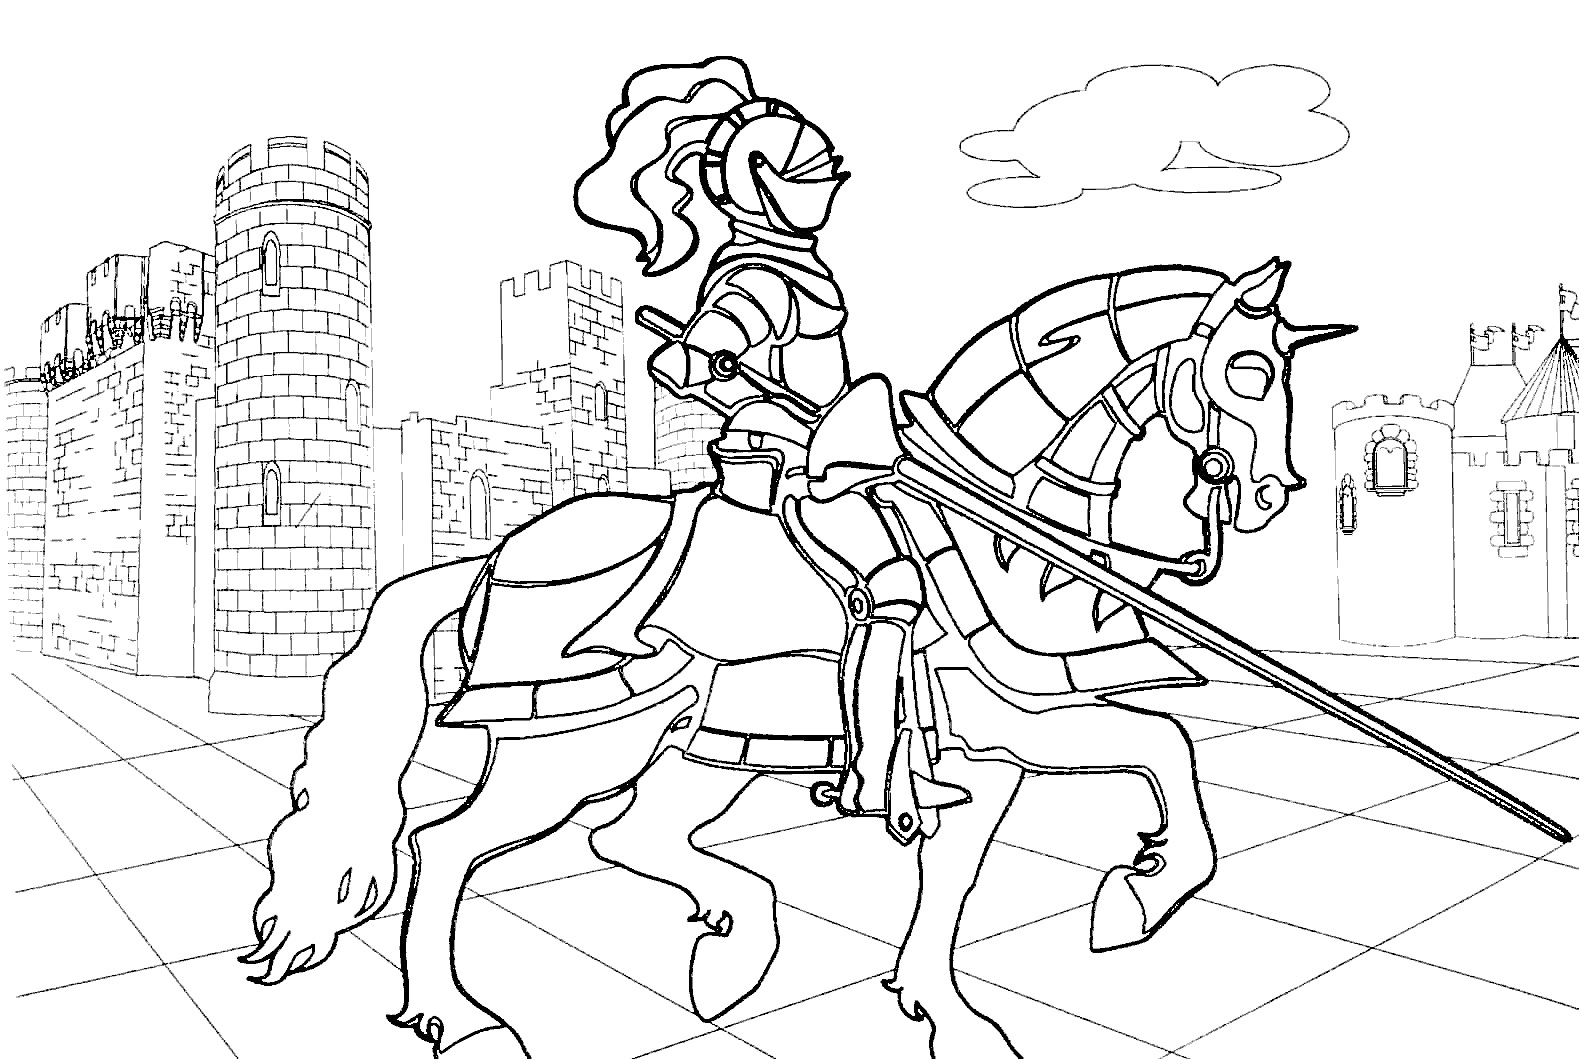 Рыцарь на коне перед замком с копьем в руке